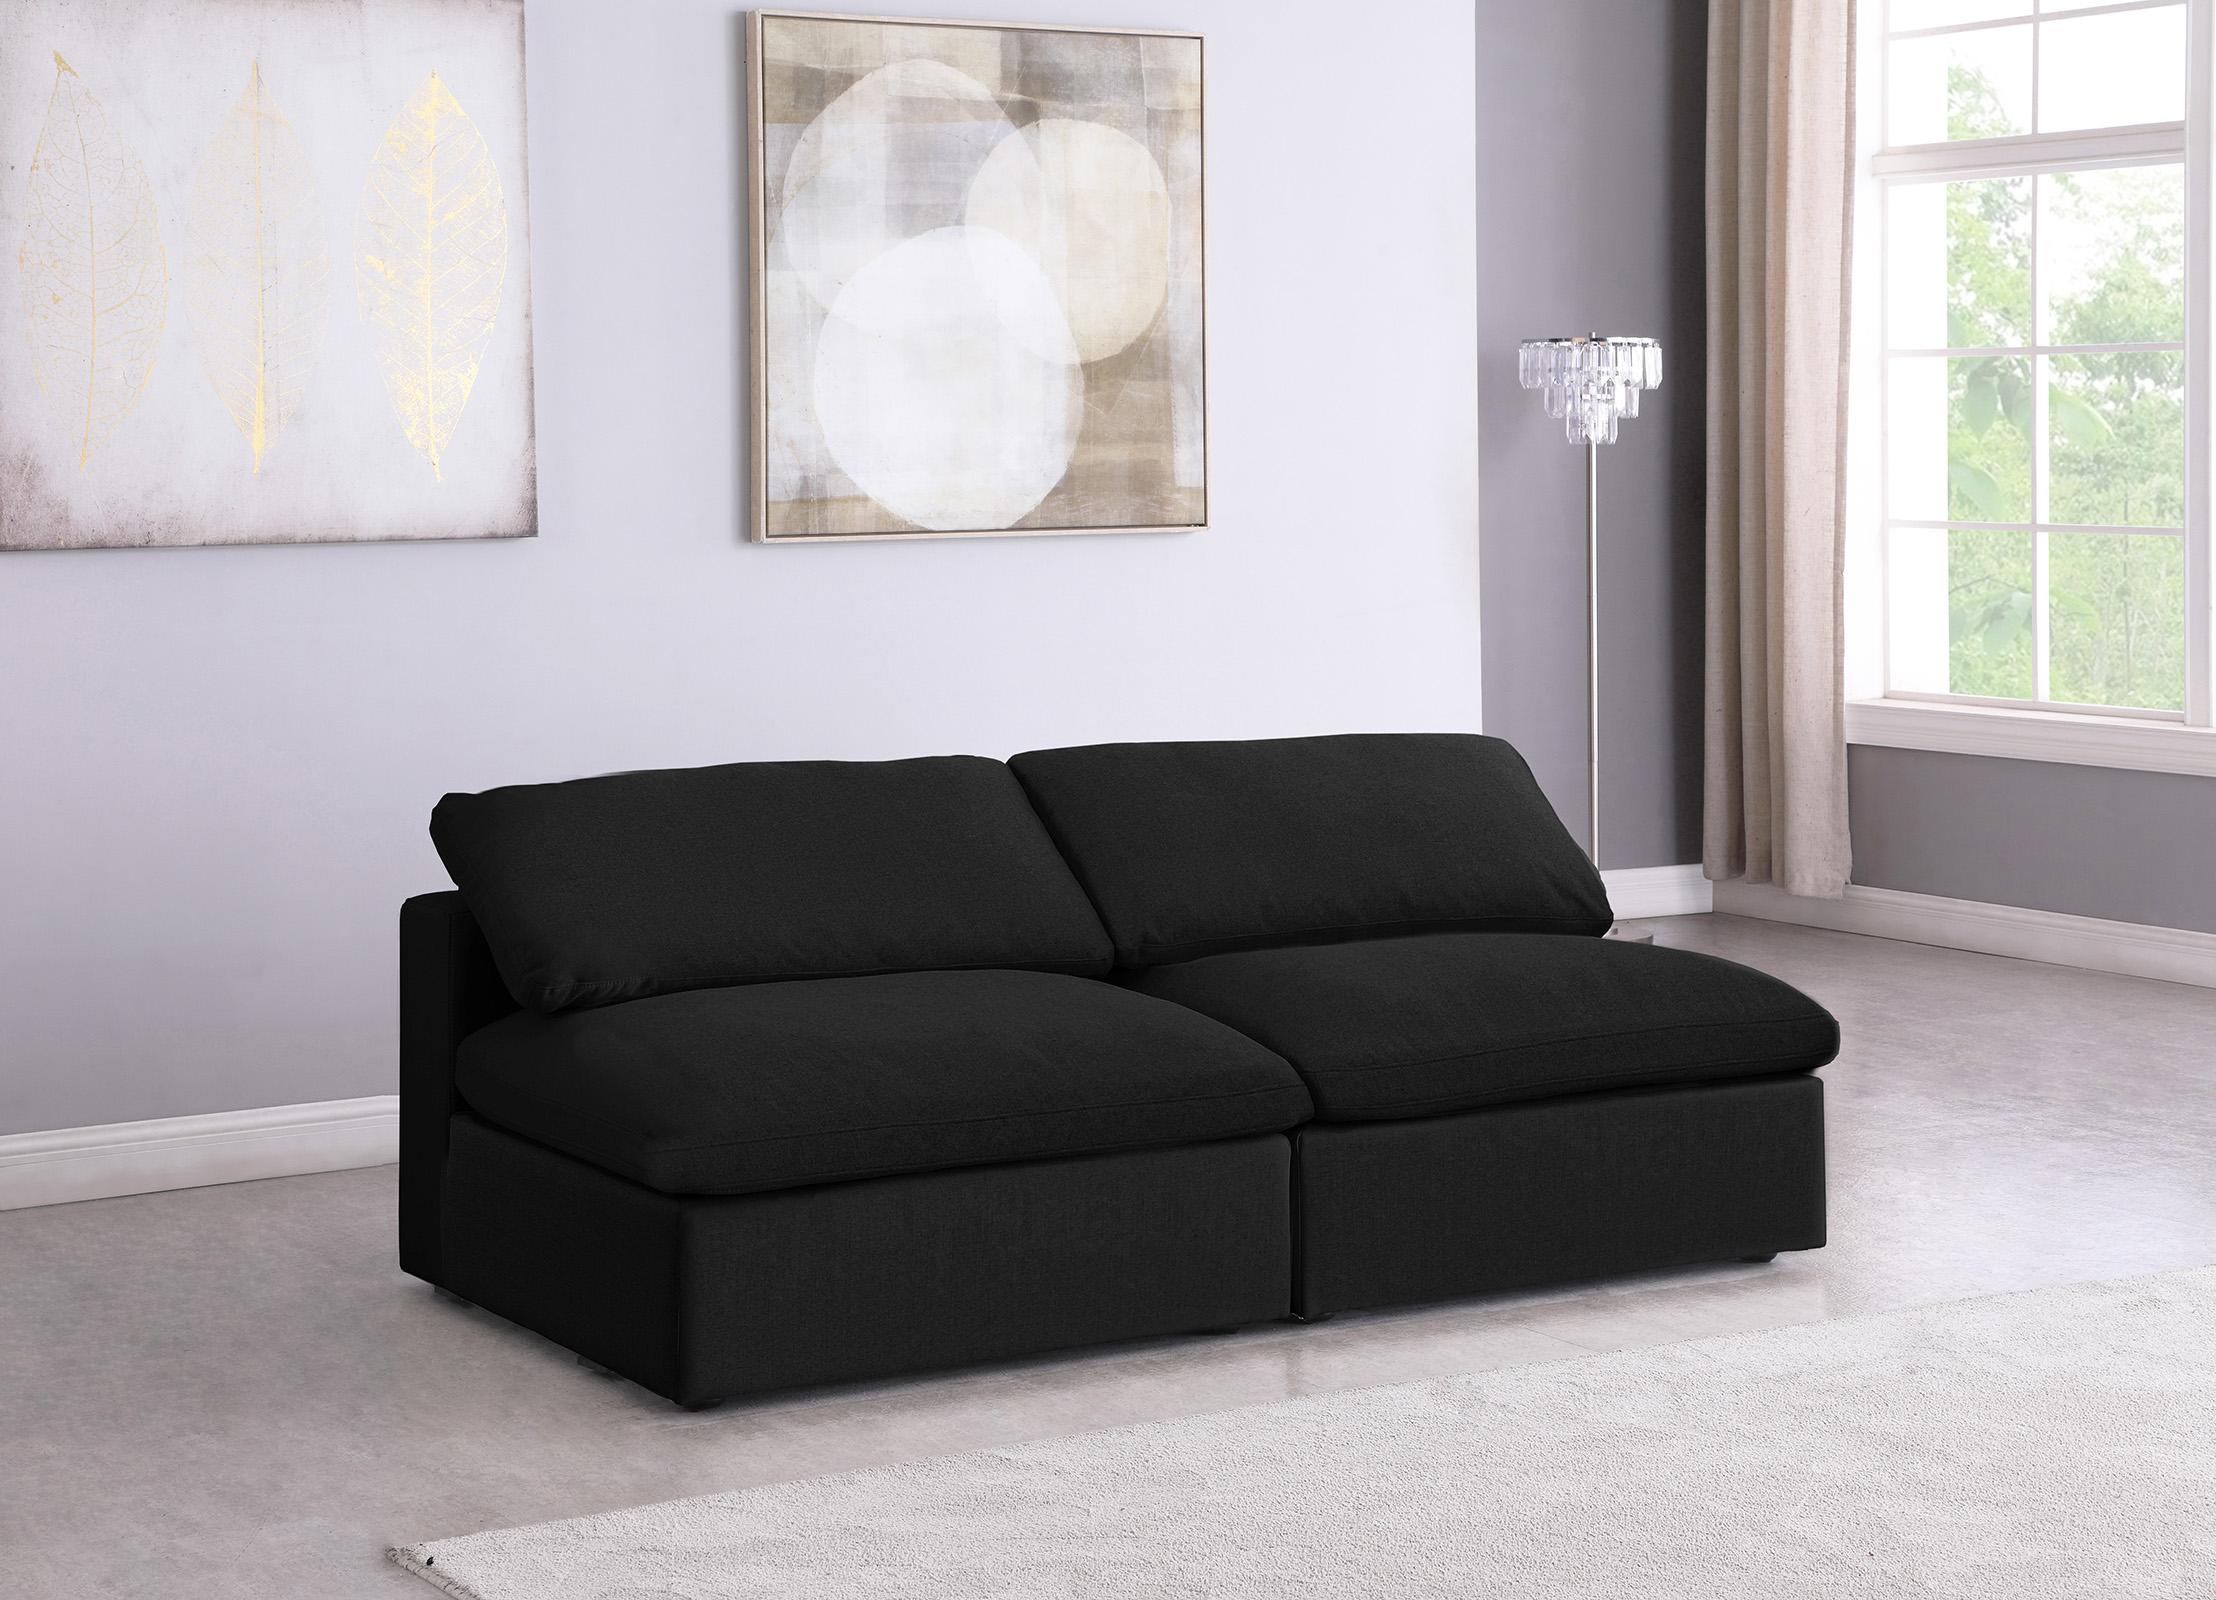 

    
Serene Black Linen Textured Fabric Deluxe Comfort Modular Armless Sofa S78 Meridian
